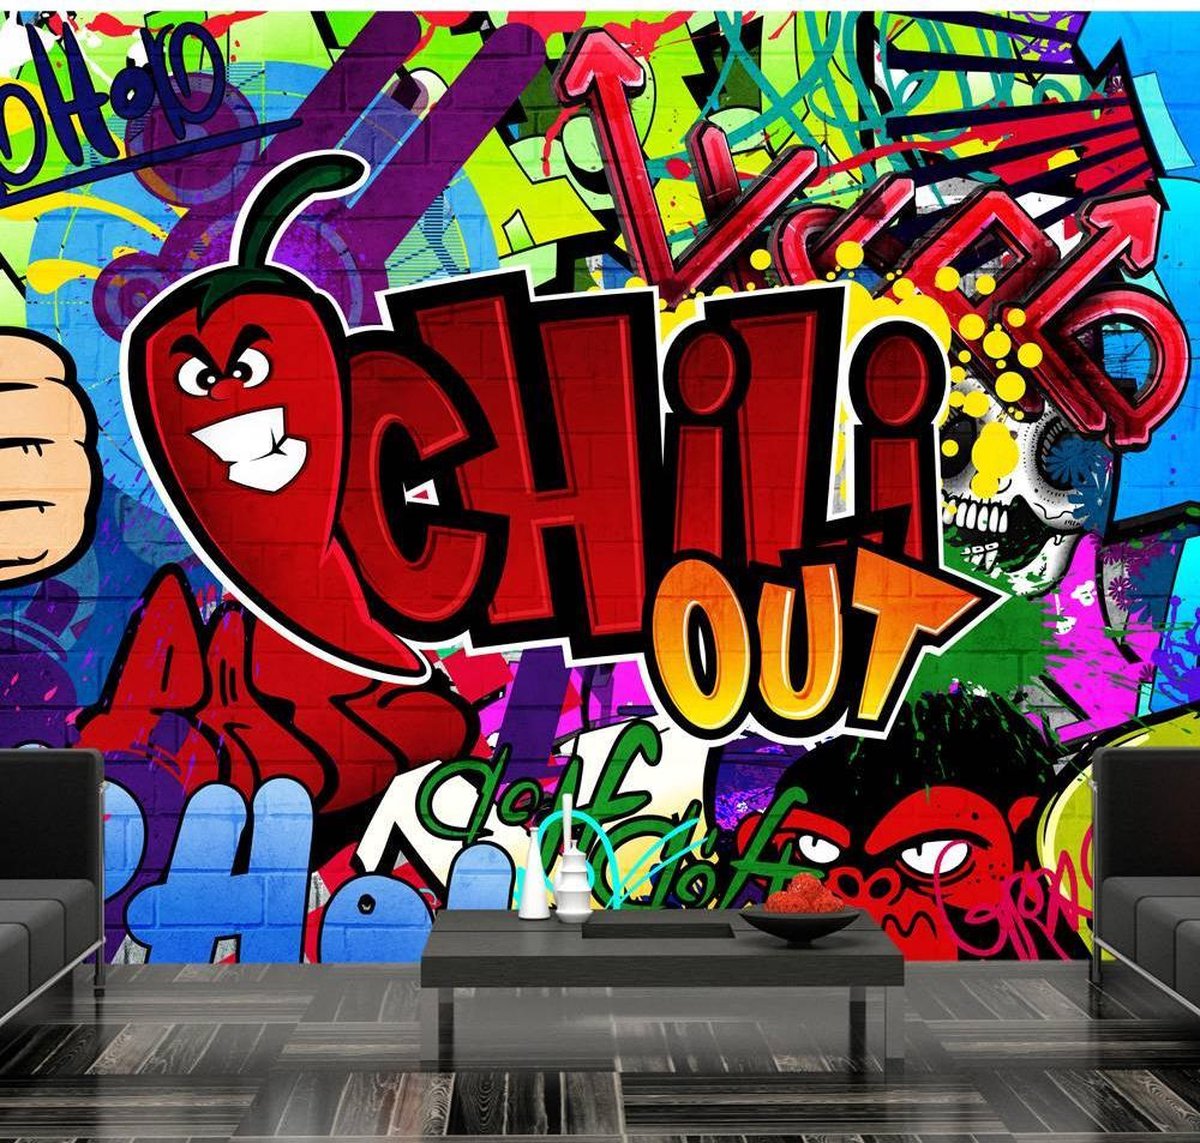 300cm X 210cm - Fotobehang - Chili out - Graffiti | bol.com